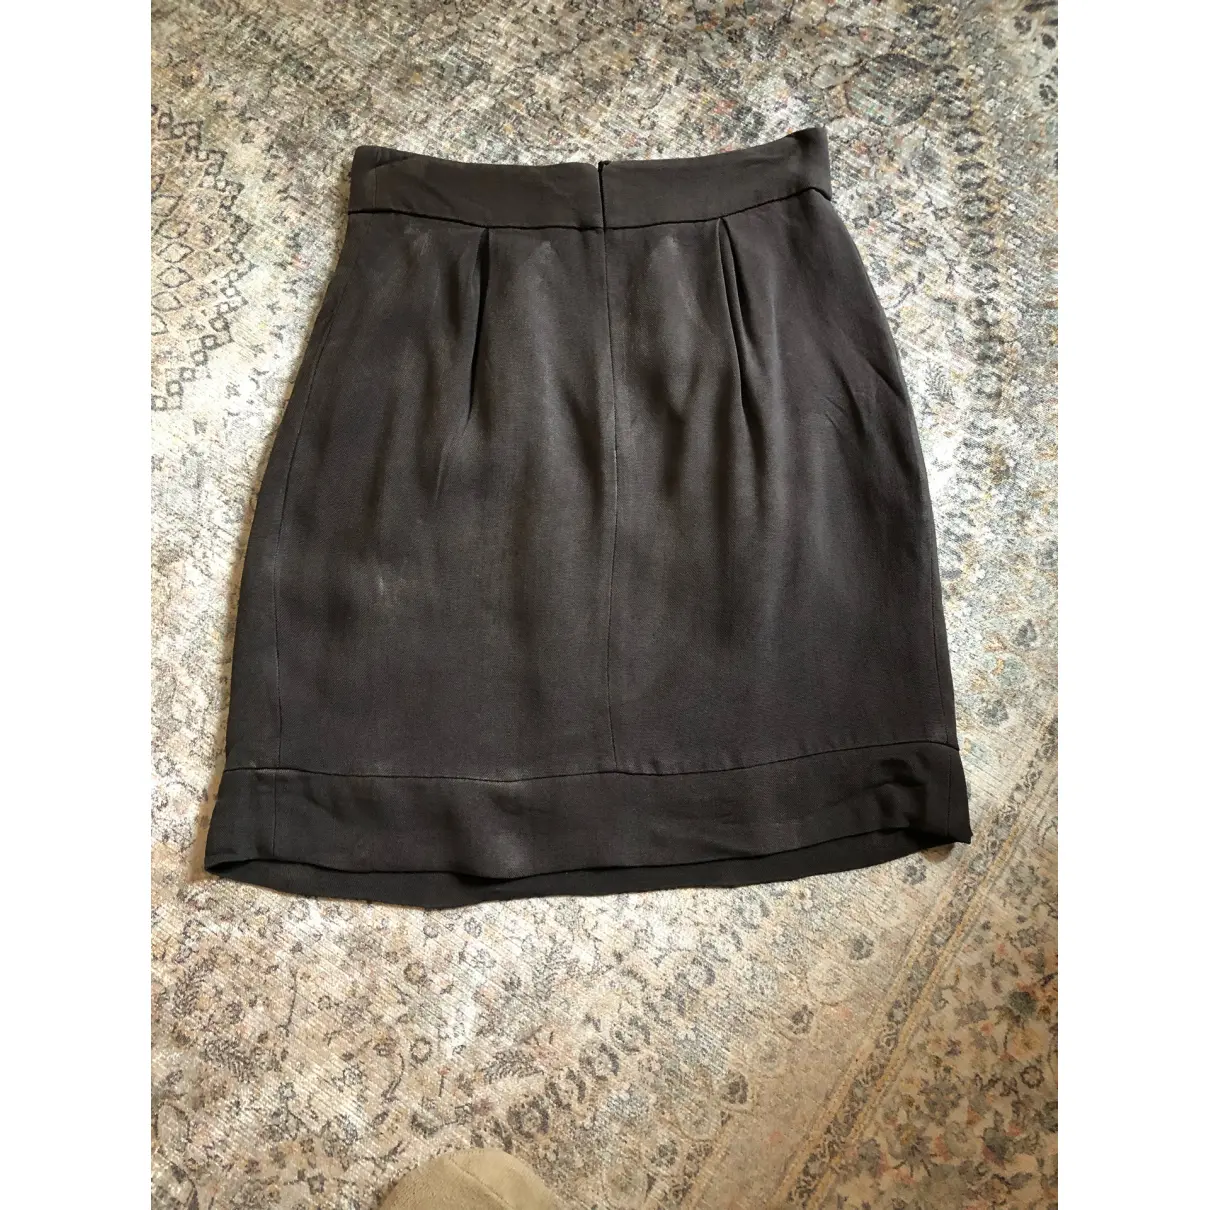 Buy Tara Jarmon Skirt suit online